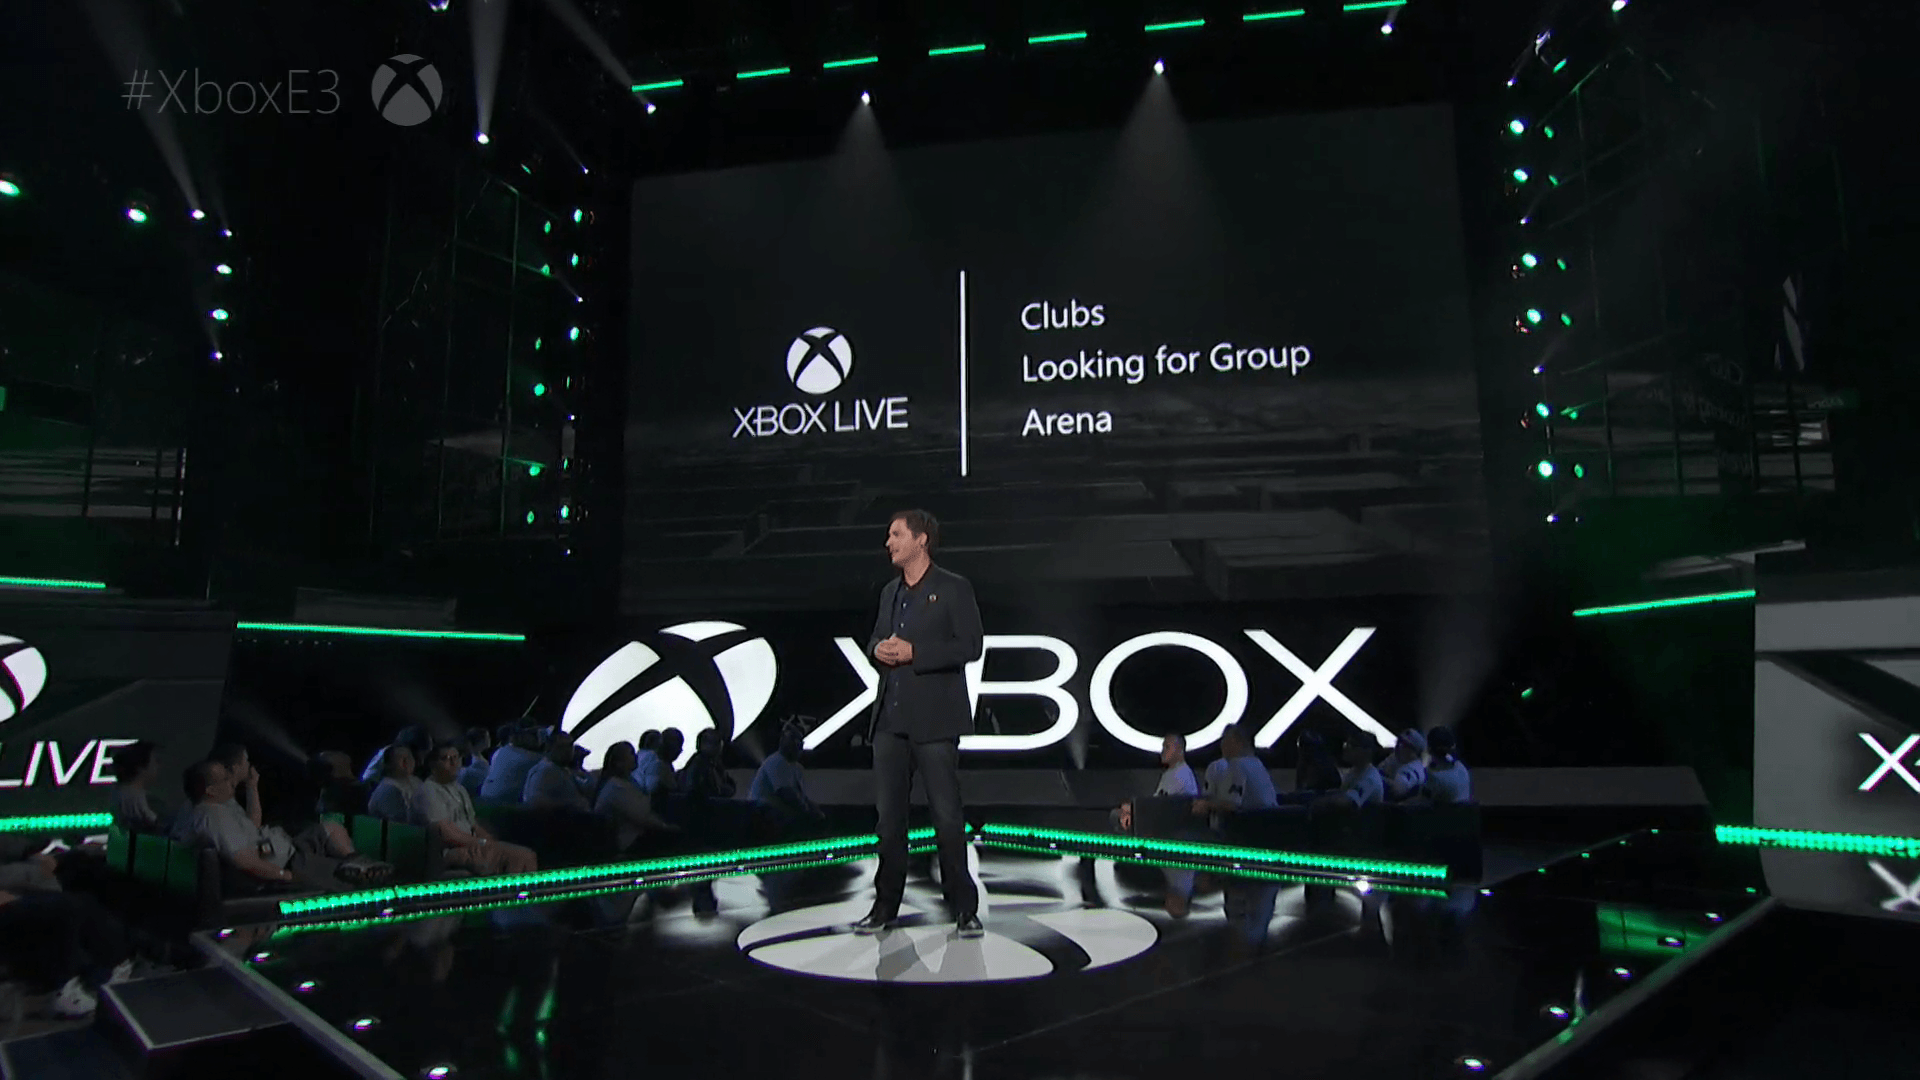 E3 2016: Microsoft Announces New Xbox Console, Shows Off Many Games